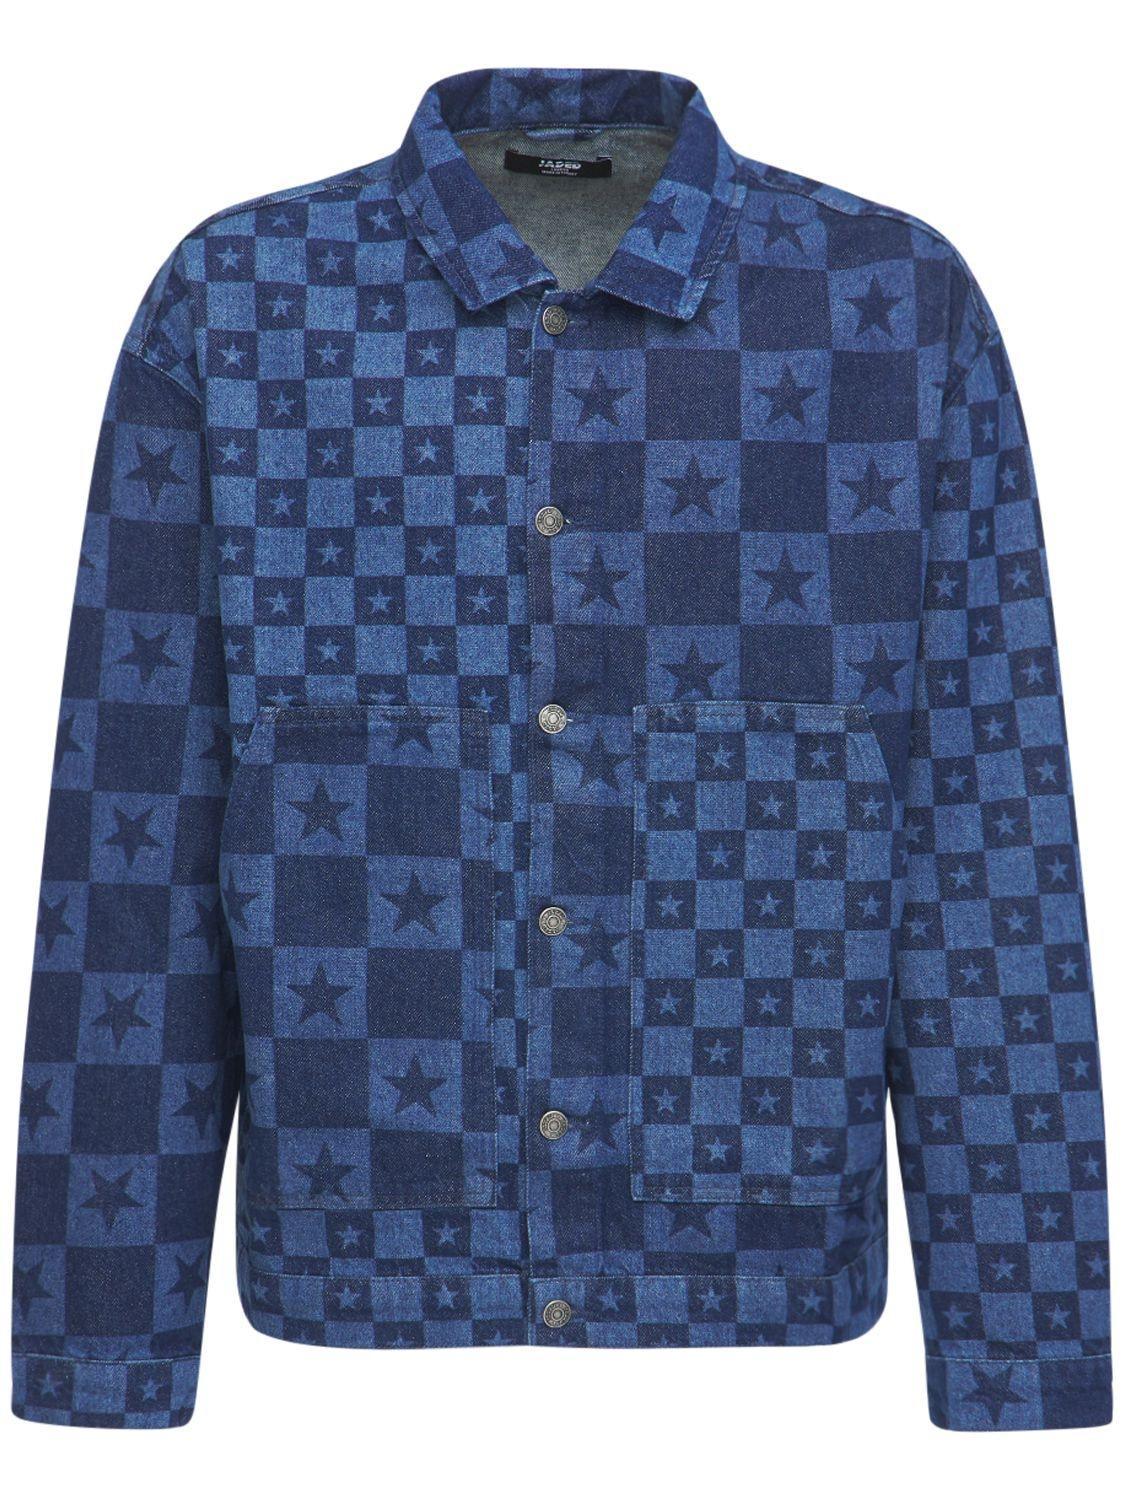 Jaded London Discharge Star Print Denim Jacket in Blue for Men 